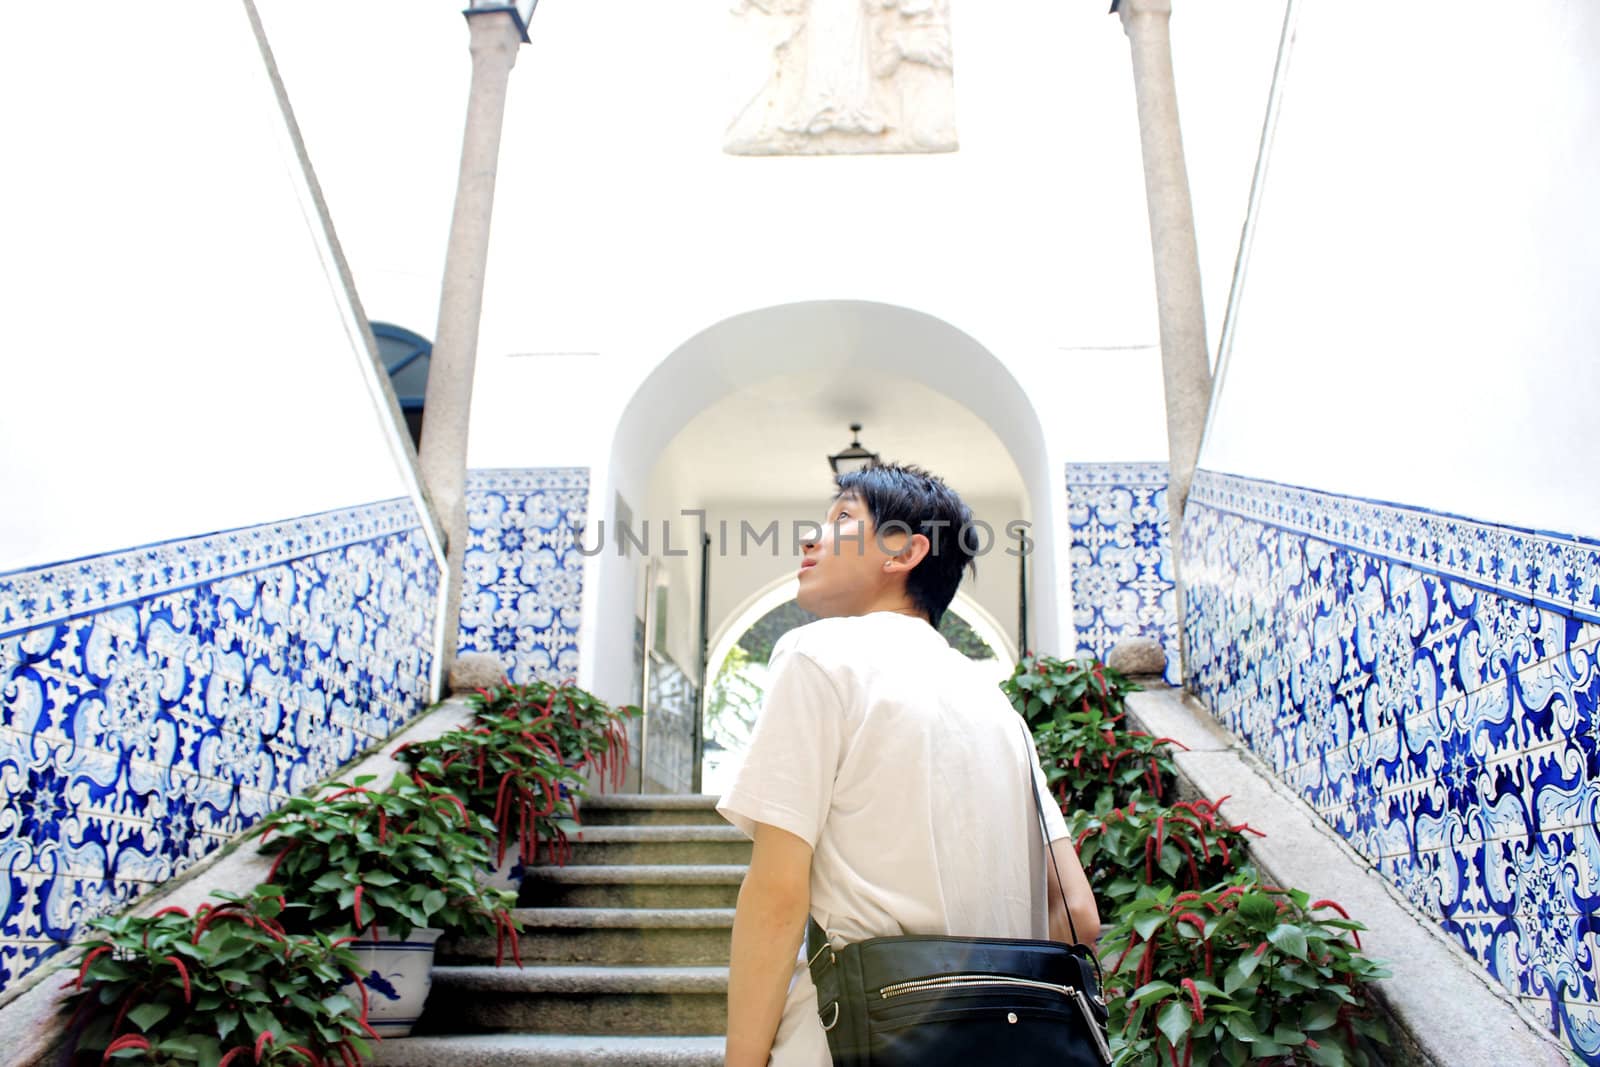 asia man walking to church stair at day